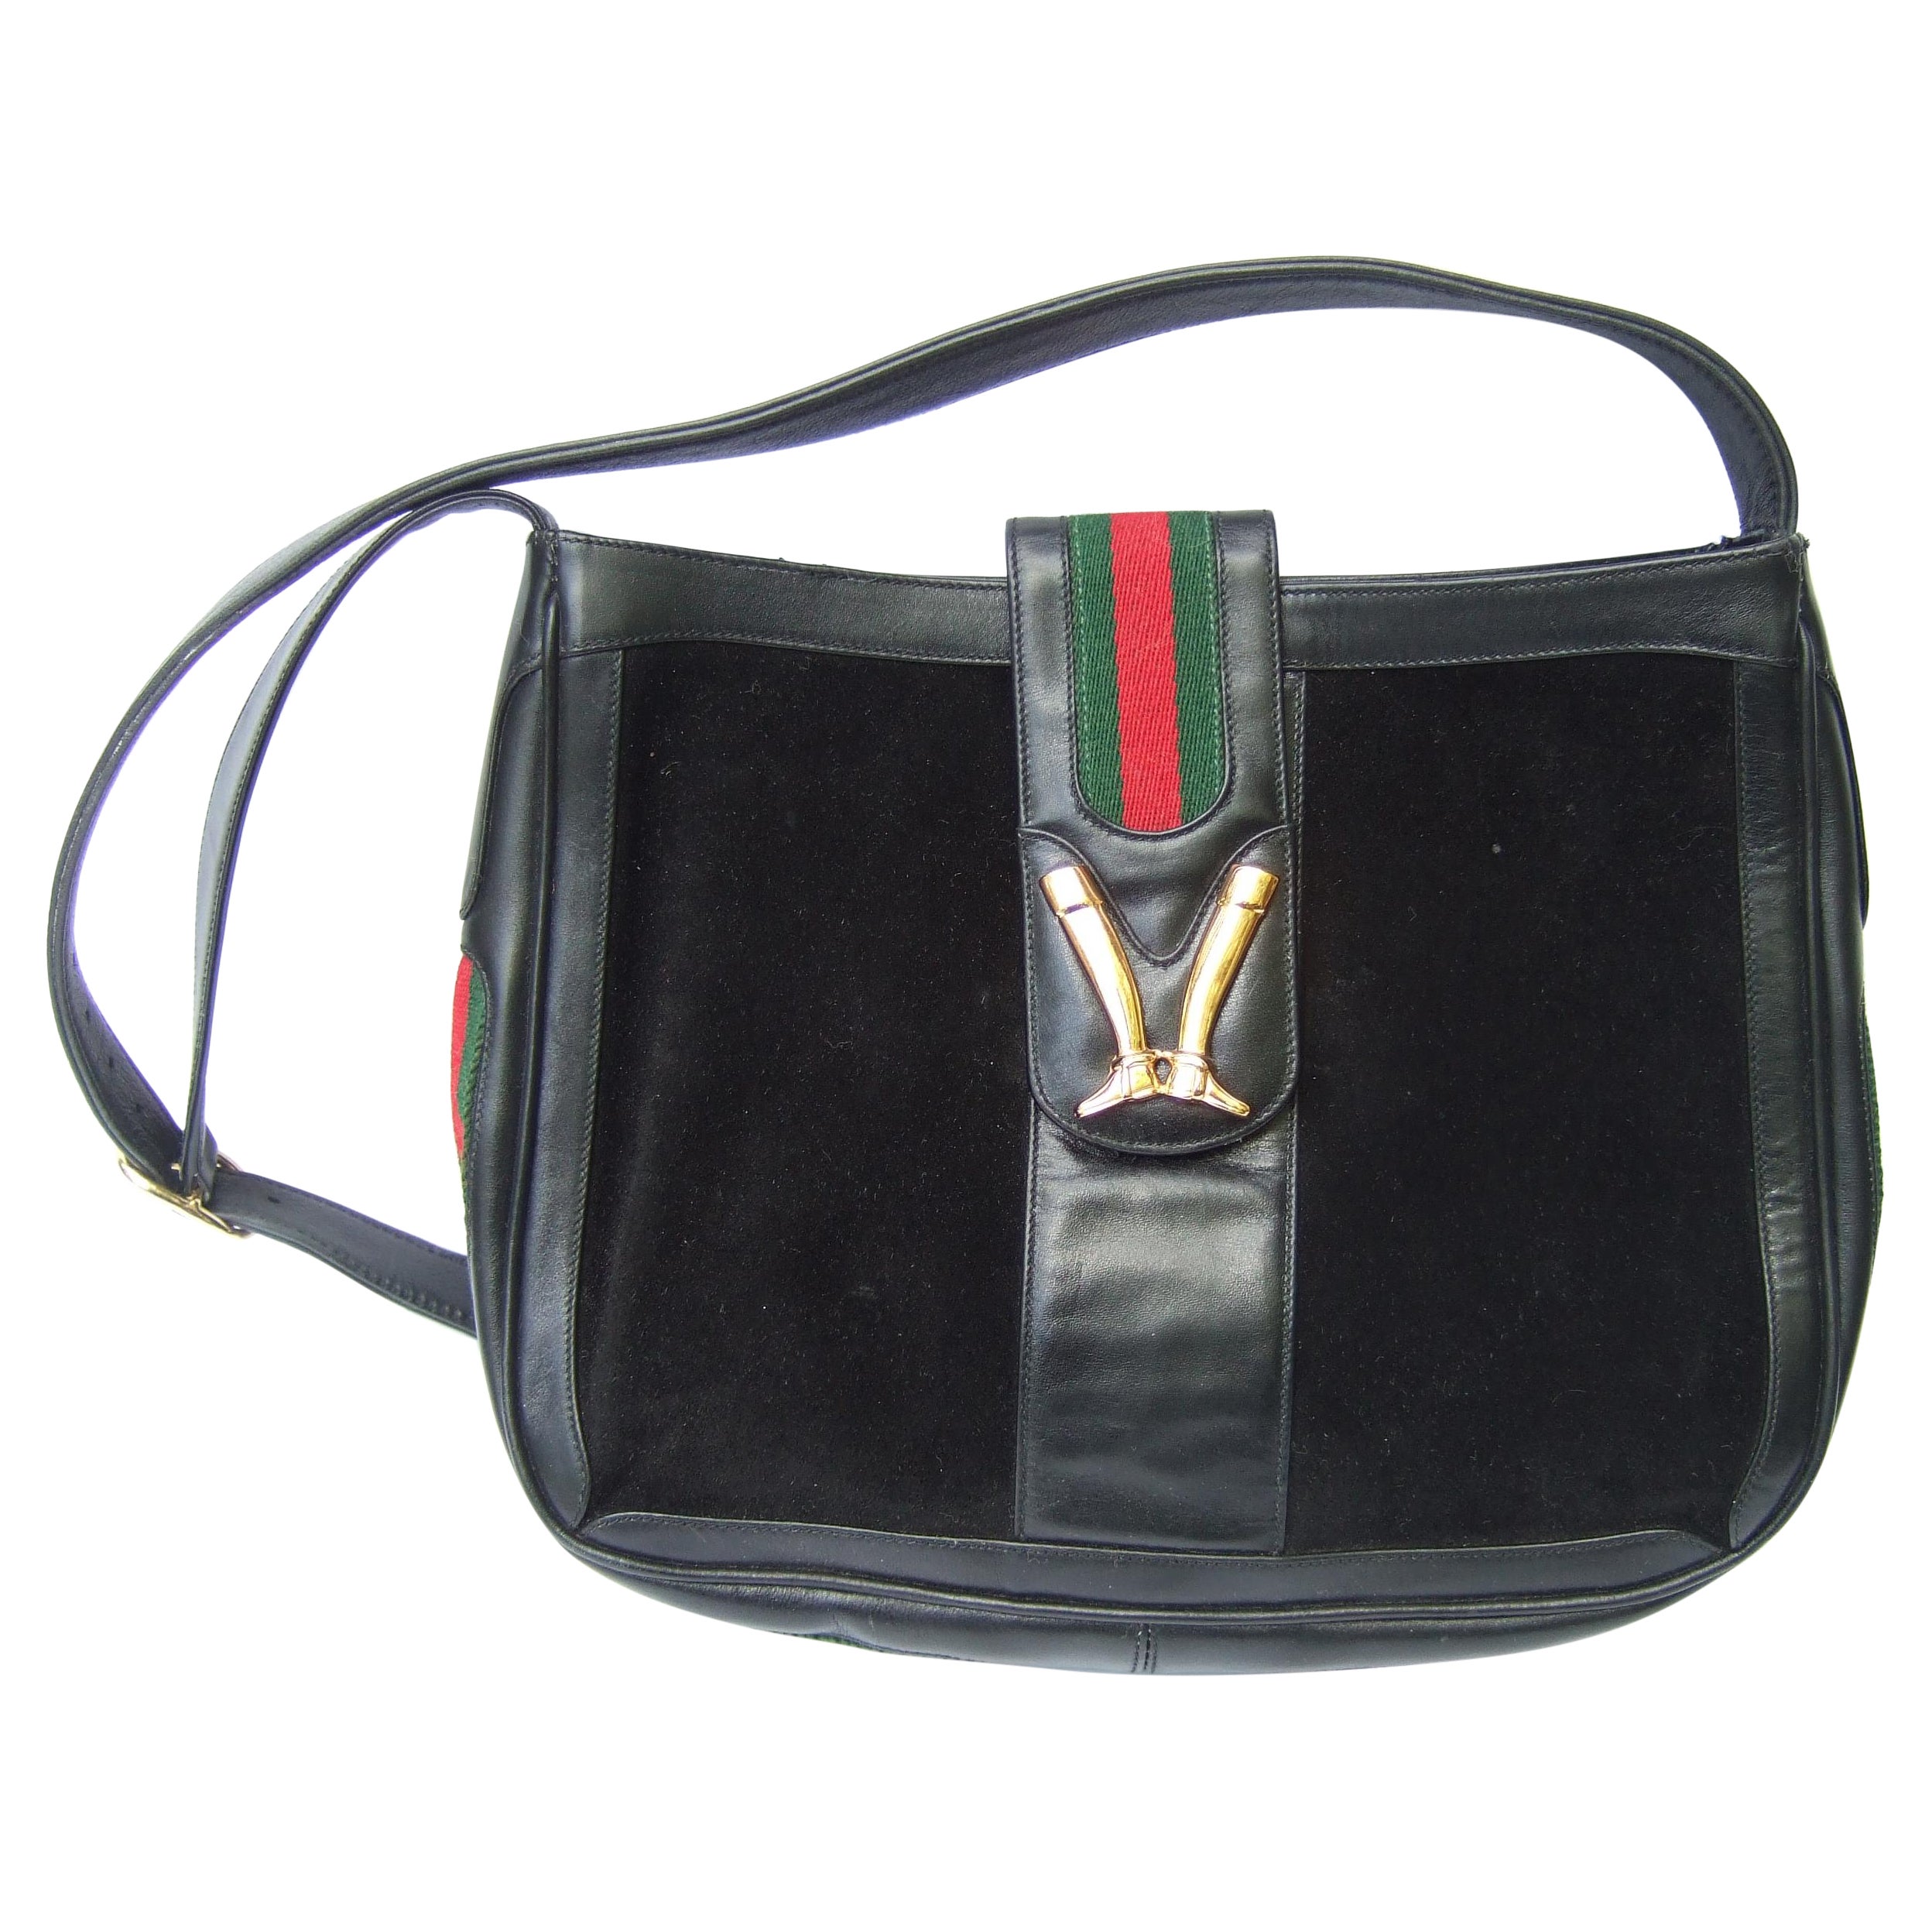 Gucci Italy. Jackie Striped Shoulder Bag